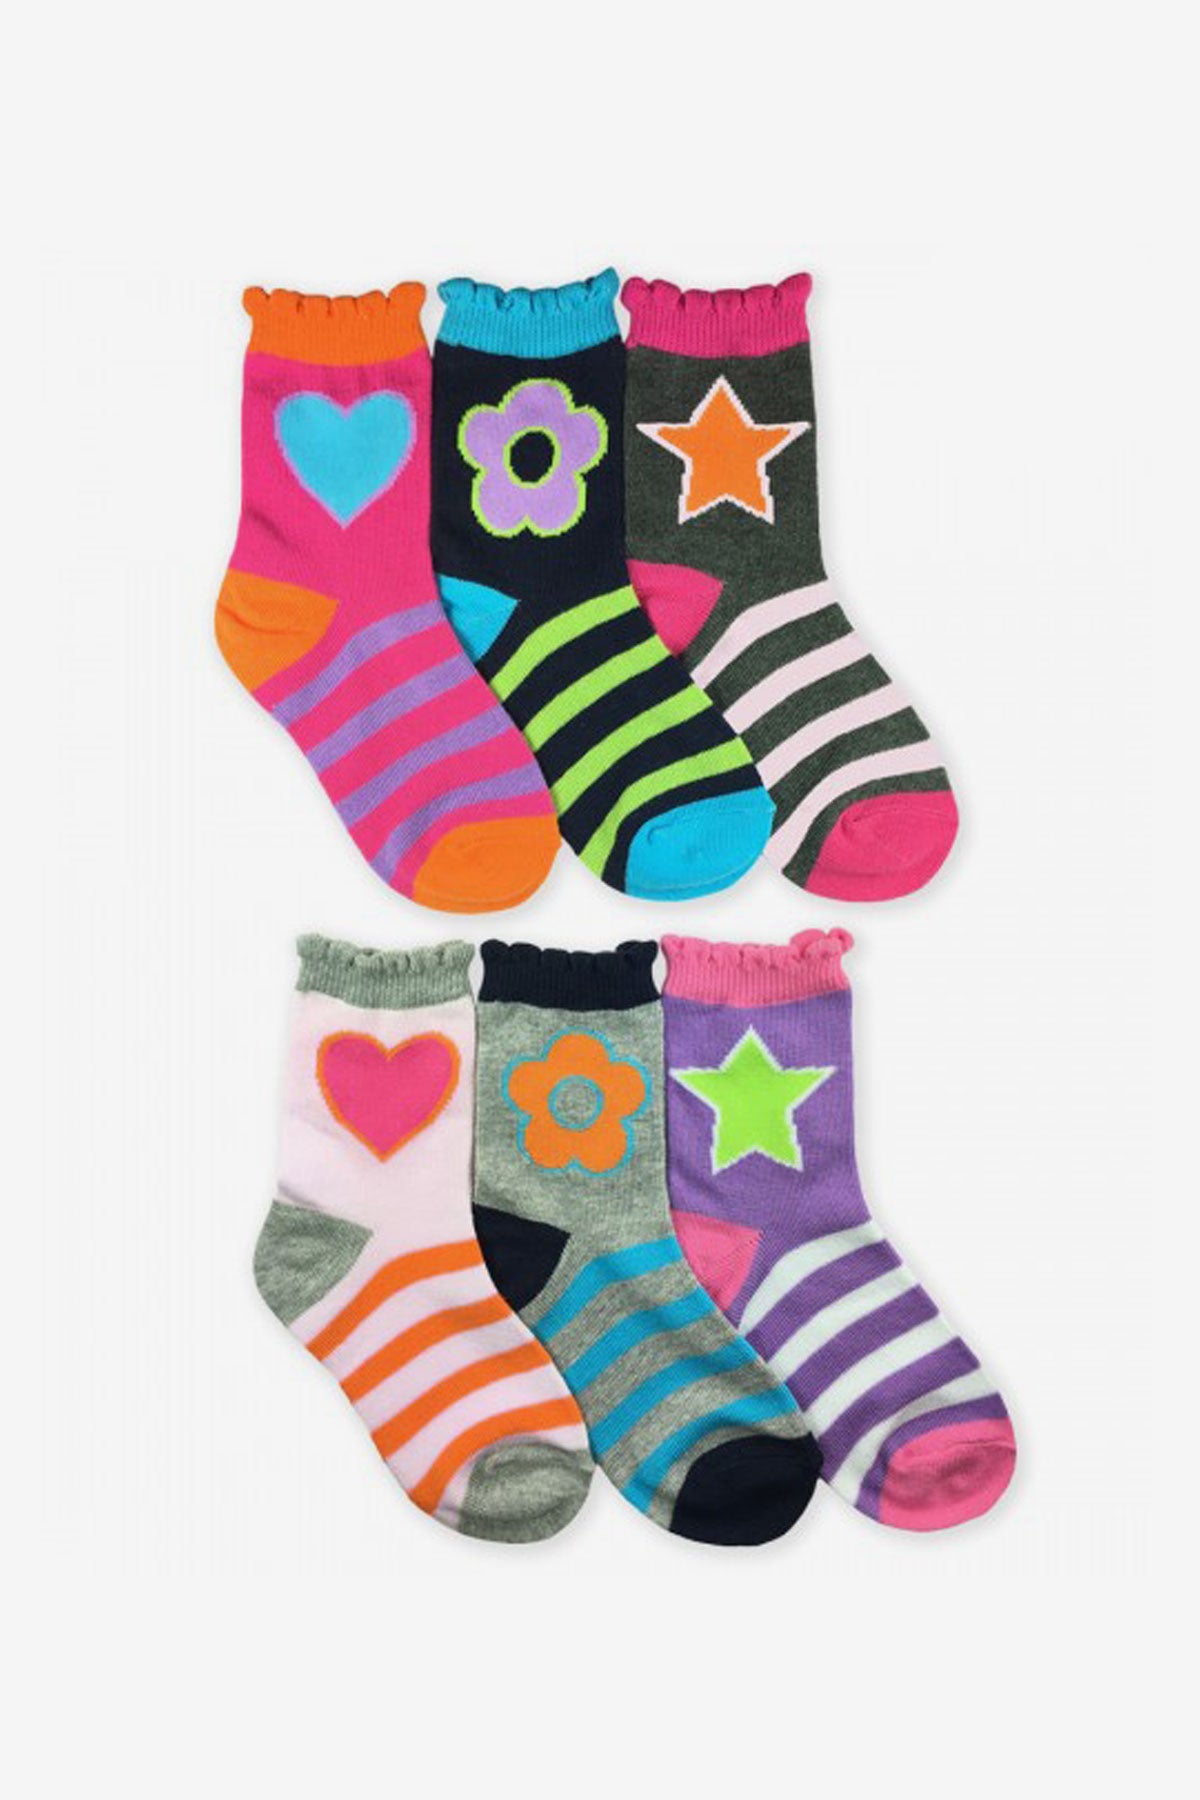 Jefferies Socks Girls' Hearts/daisies/stripes Fashion Crew Socks 6 Pack